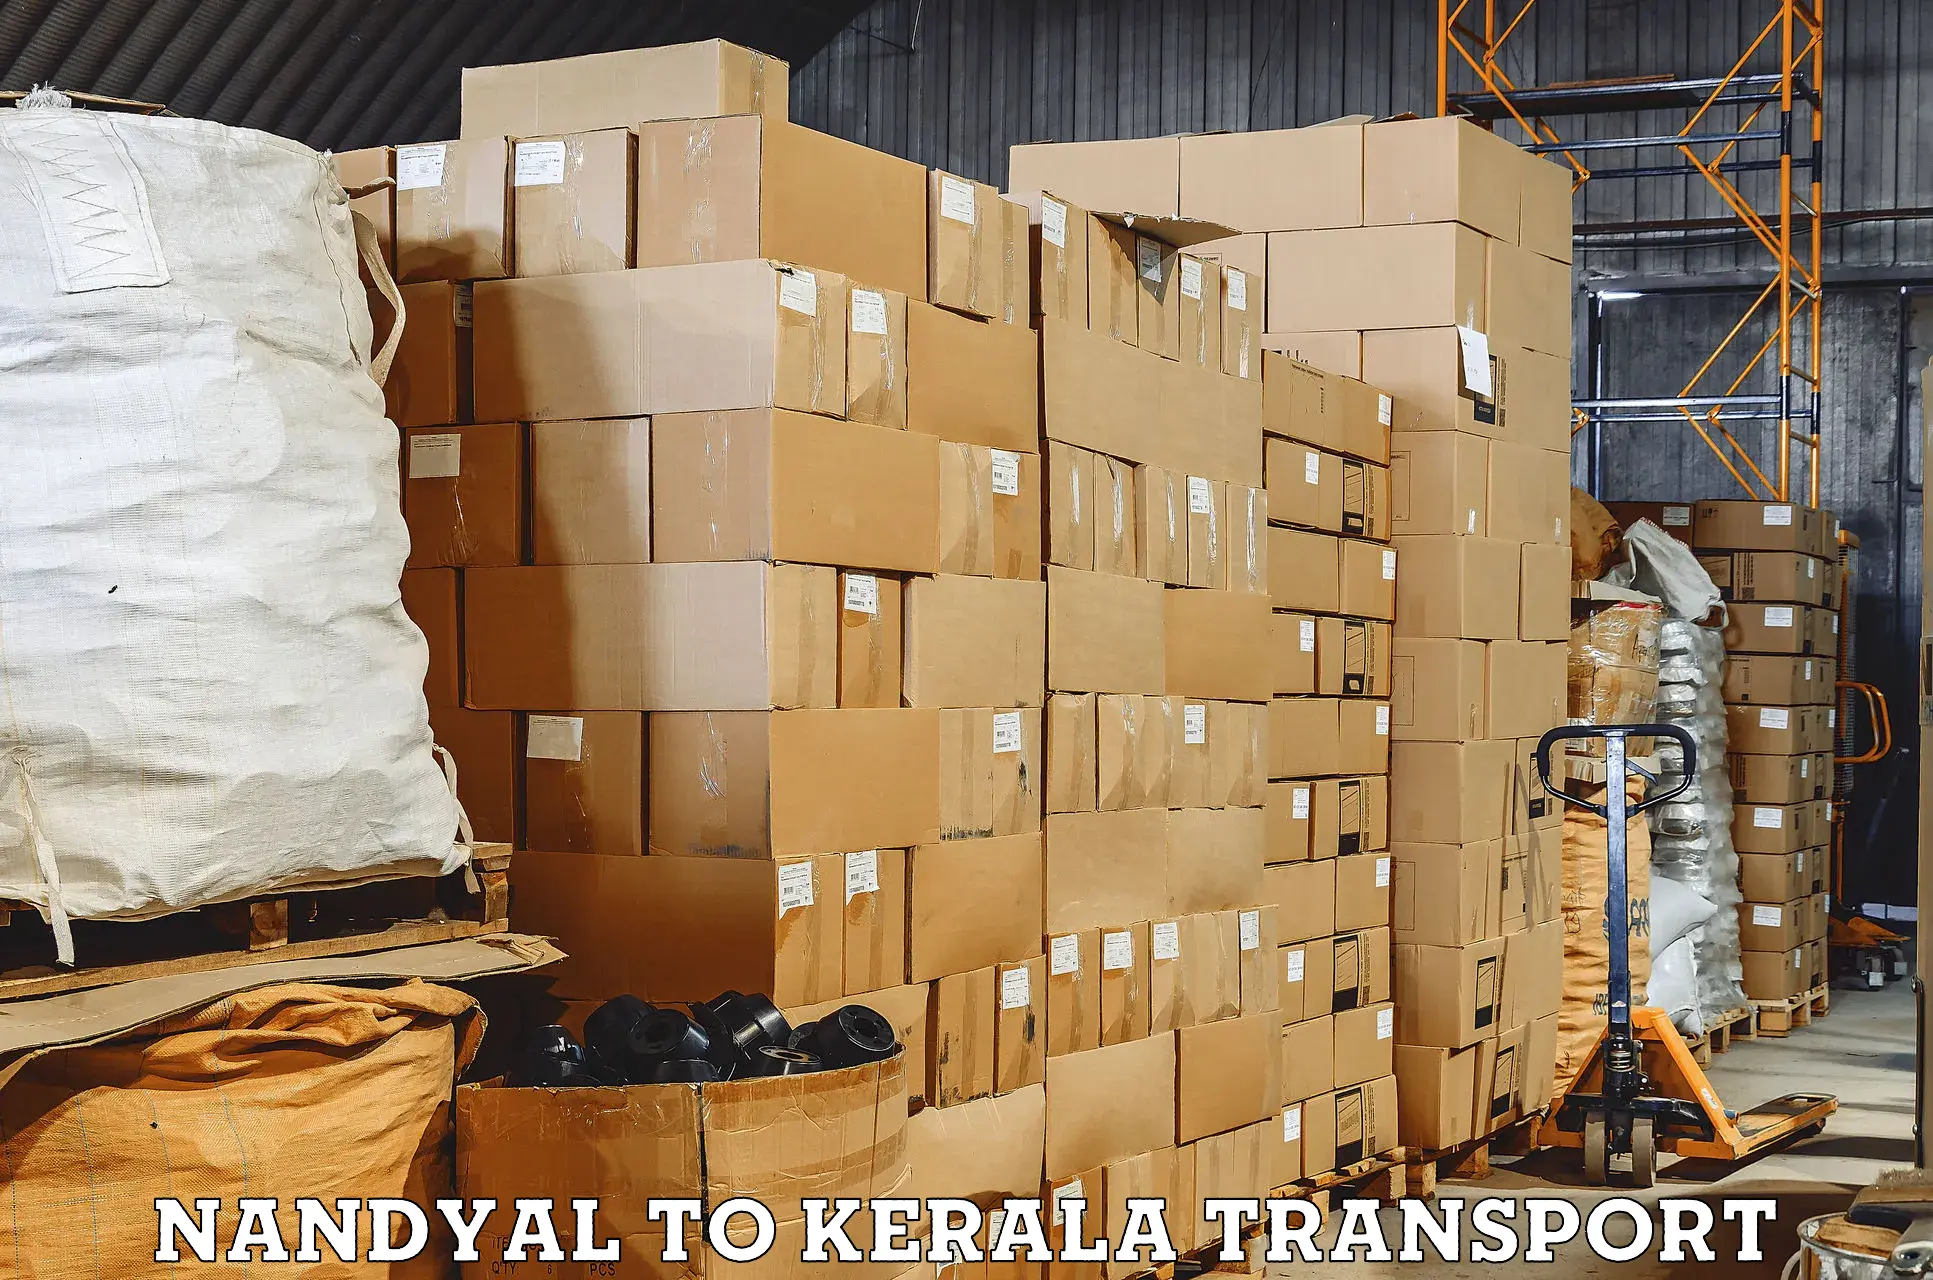 Nearby transport service Nandyal to Alappuzha